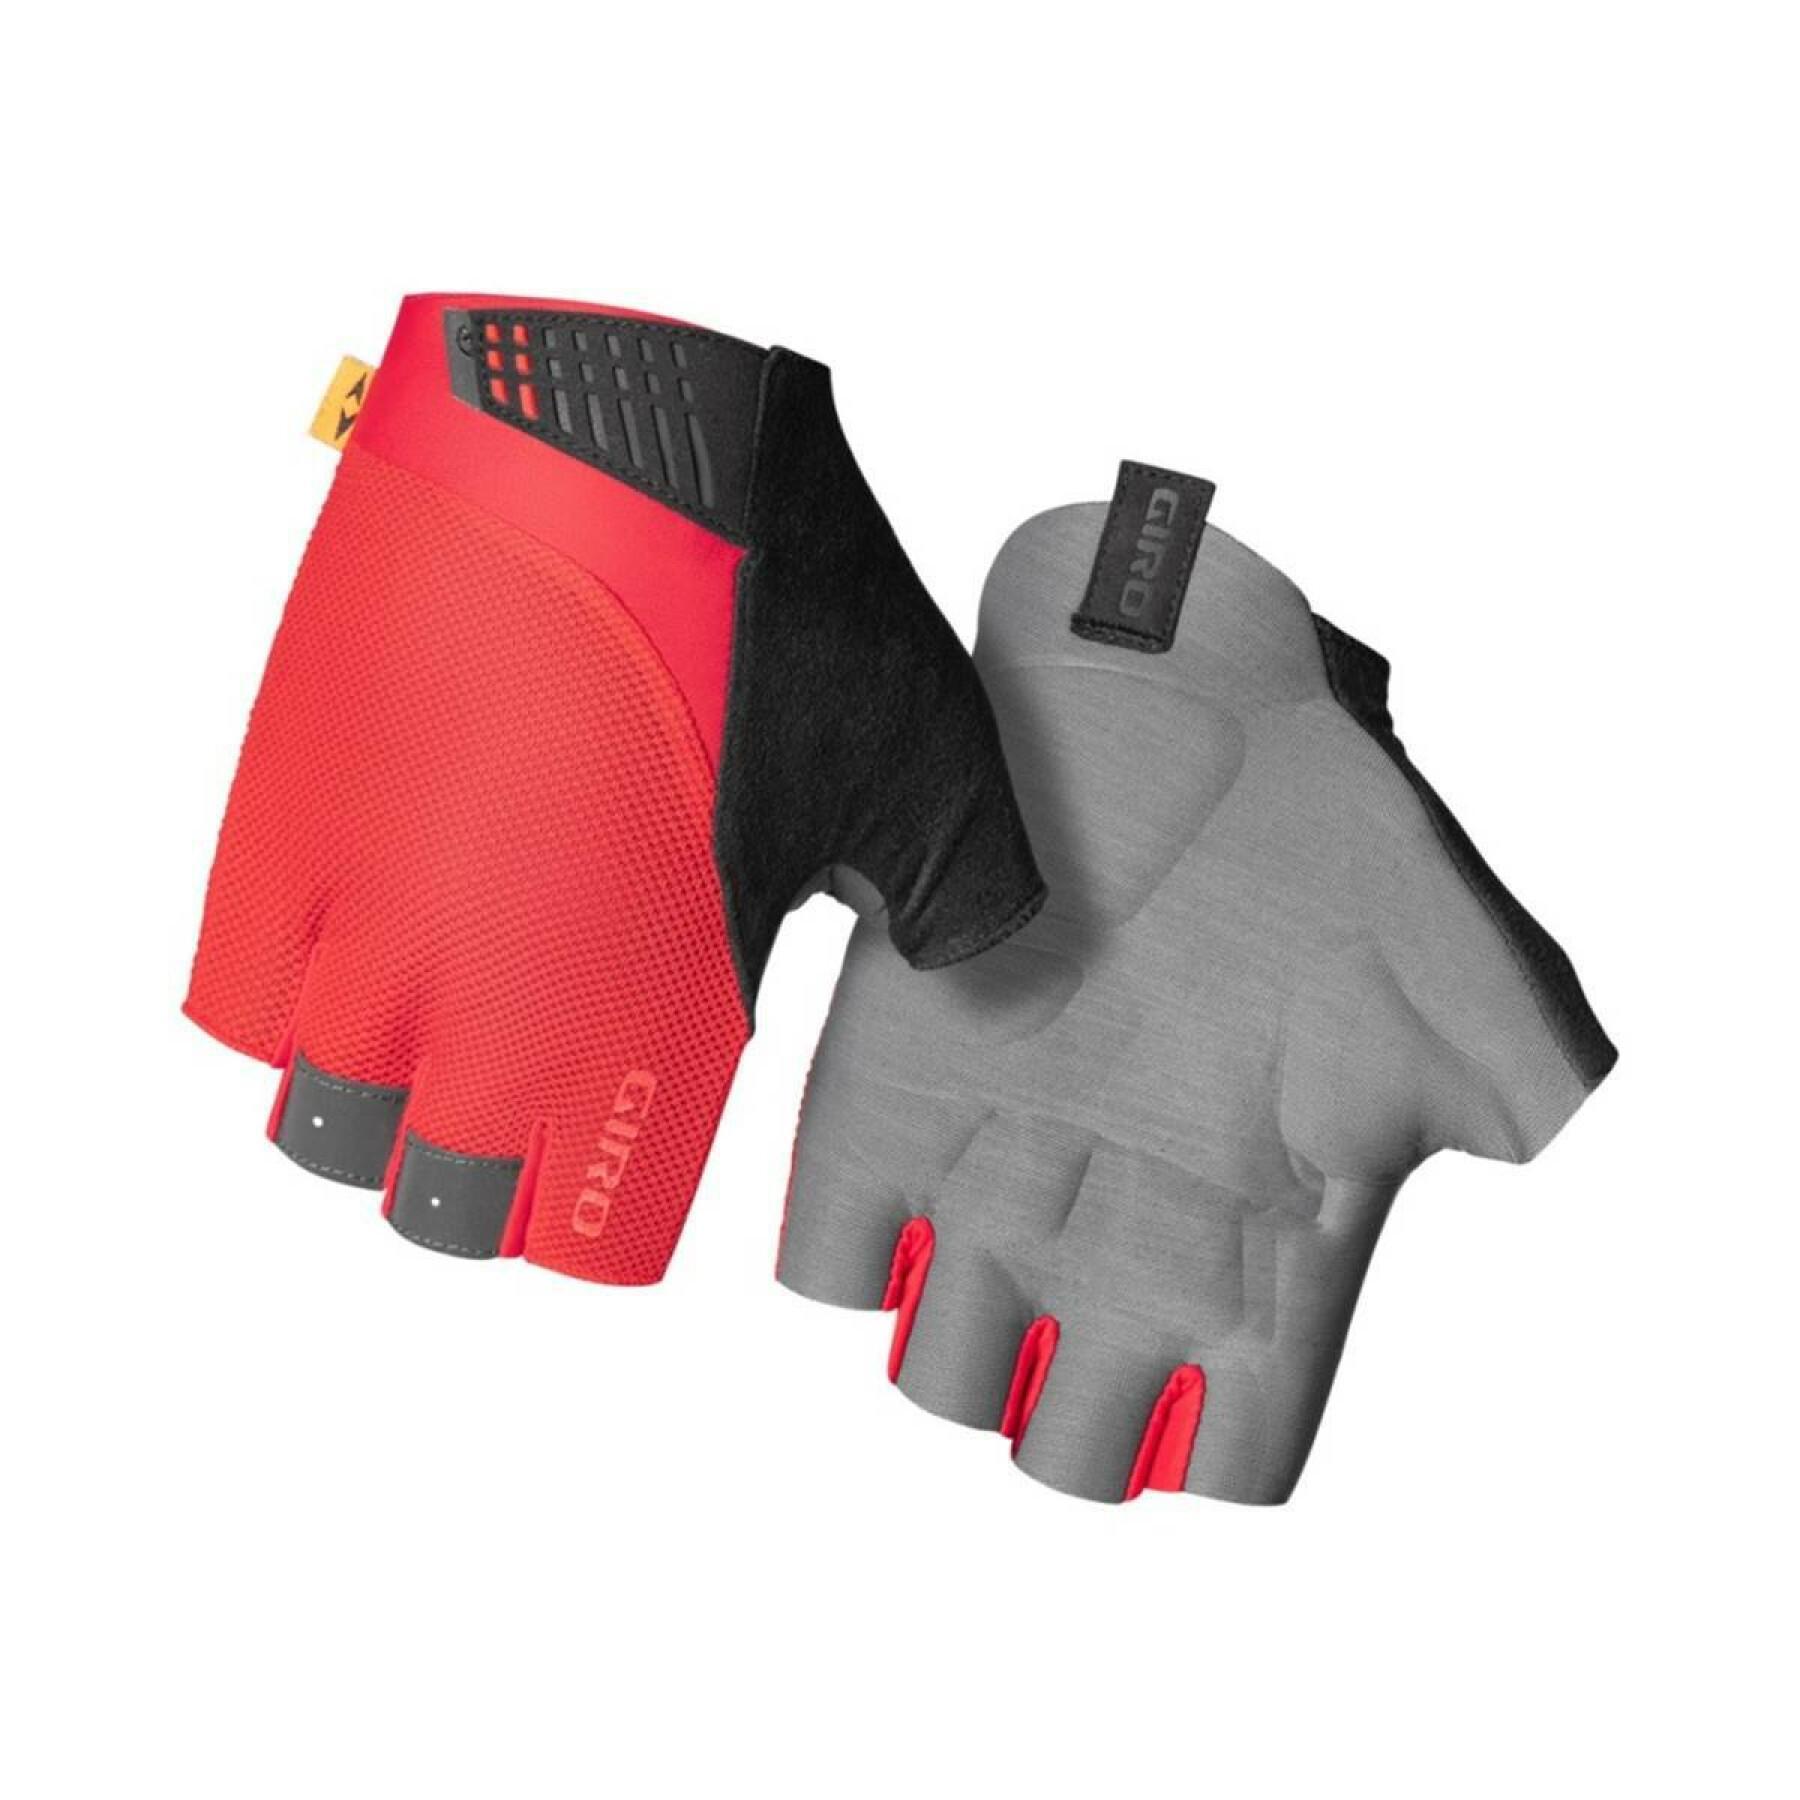 Giro Handschuhe Kurze - Handschuhen Ausrüstung - Supernatural - Rennrad